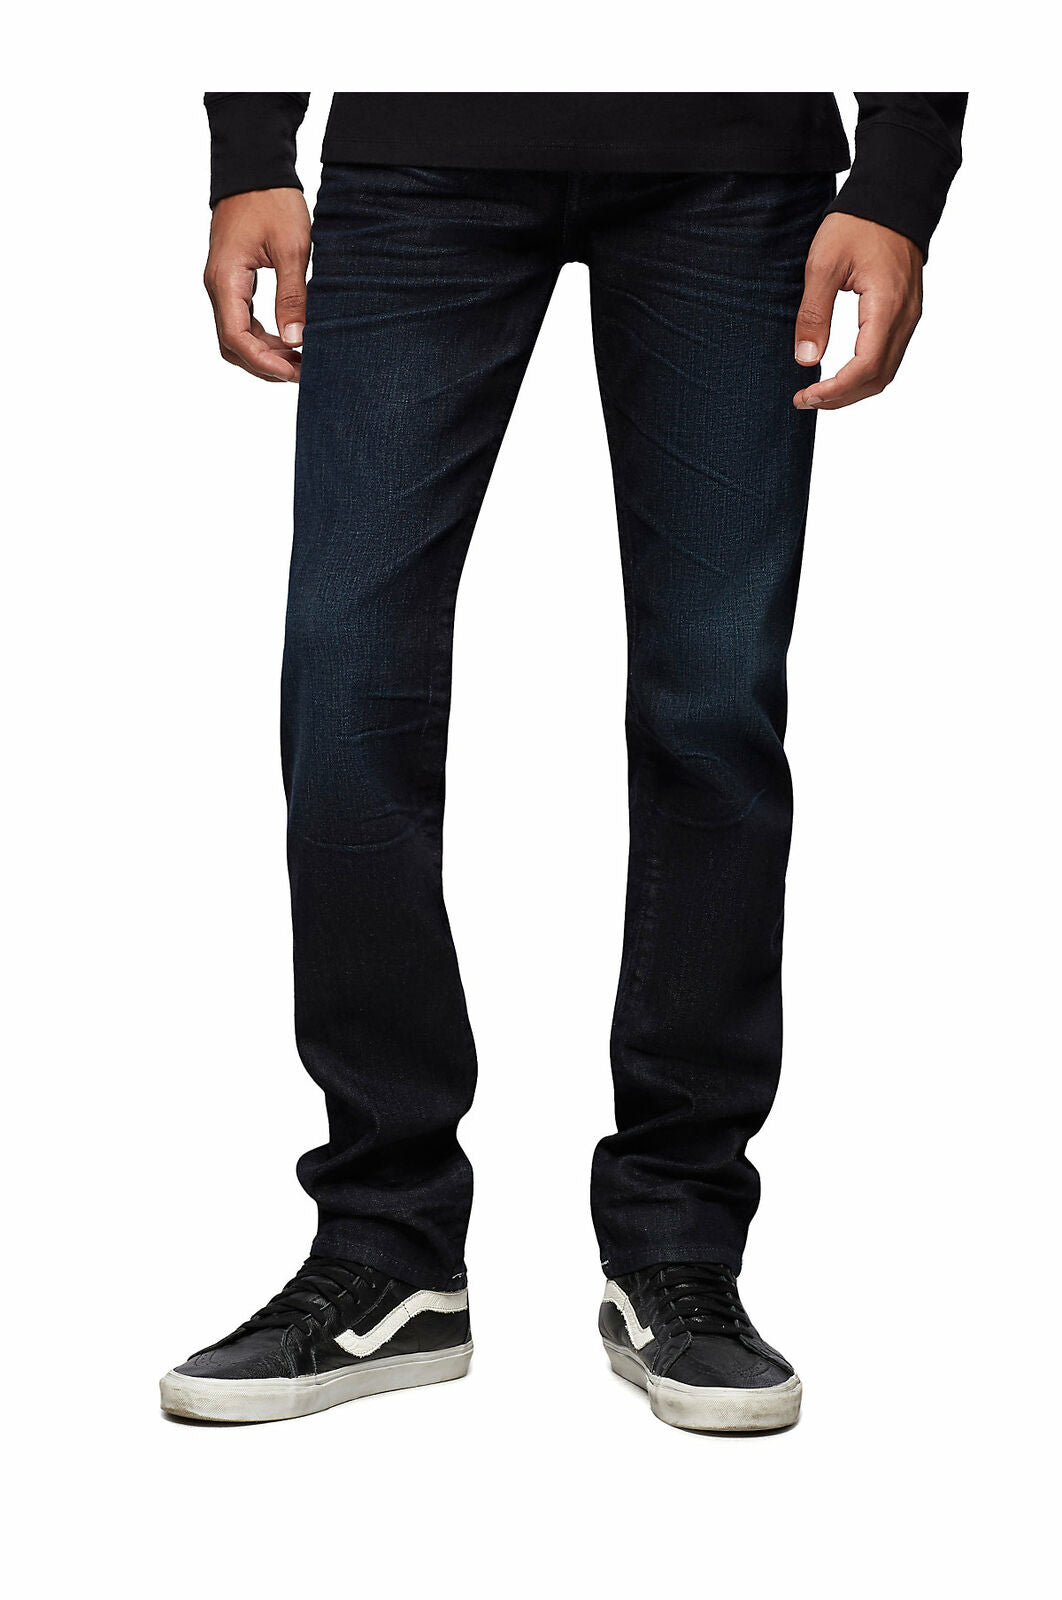 True Religion Rocco Silver Lurex Skinny Fit Stretch Jeans